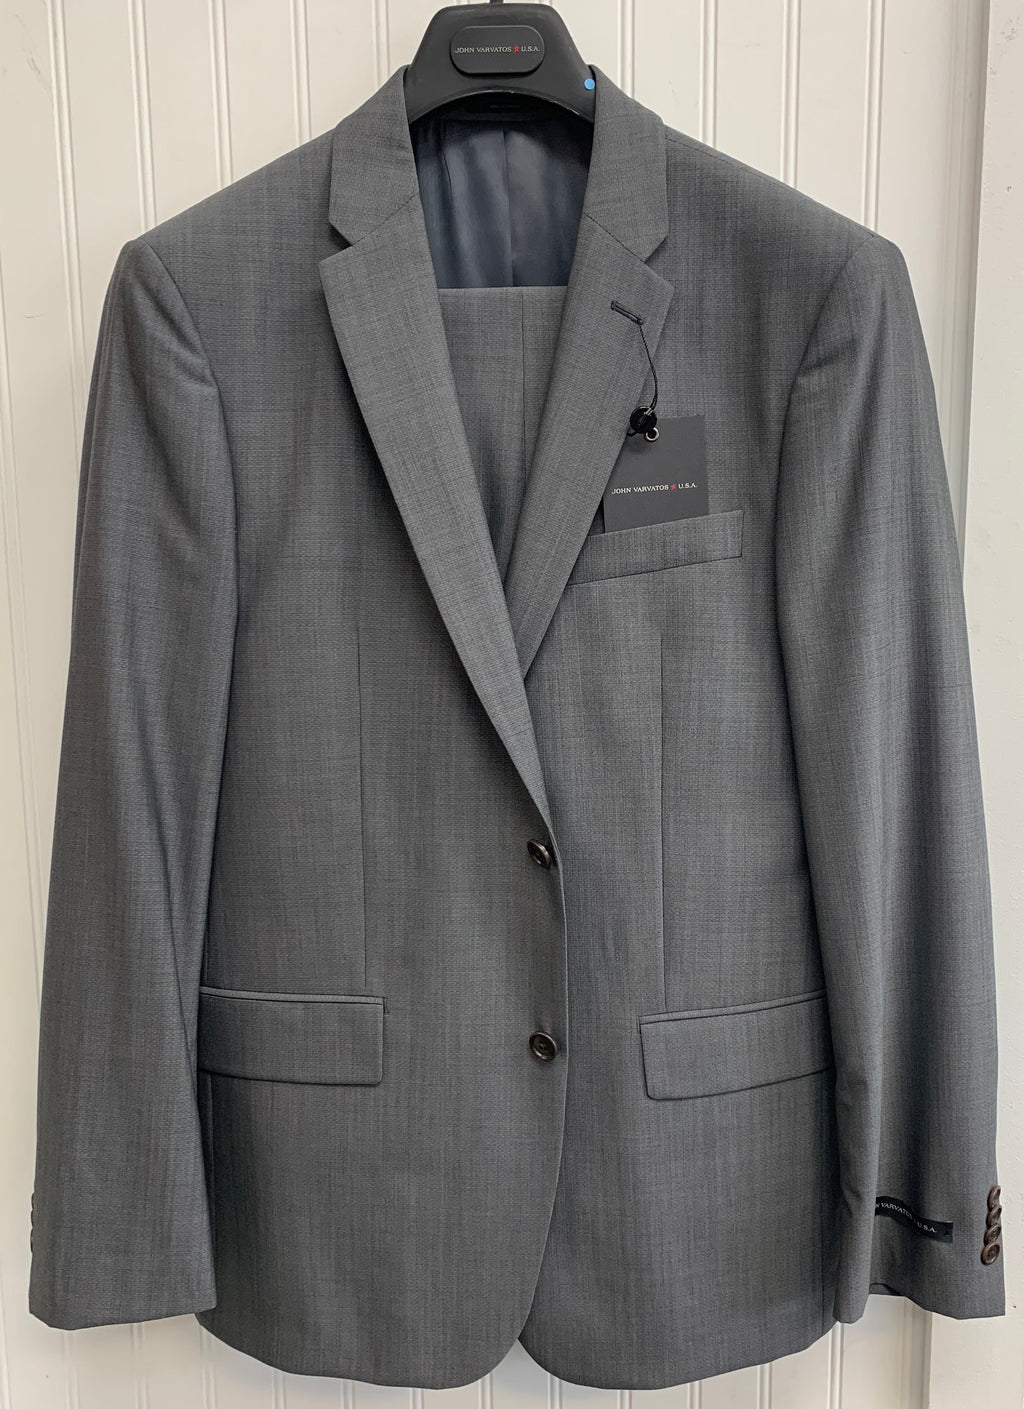 John Varvatos Wool Suit - 2VBW0193 - (Gray)